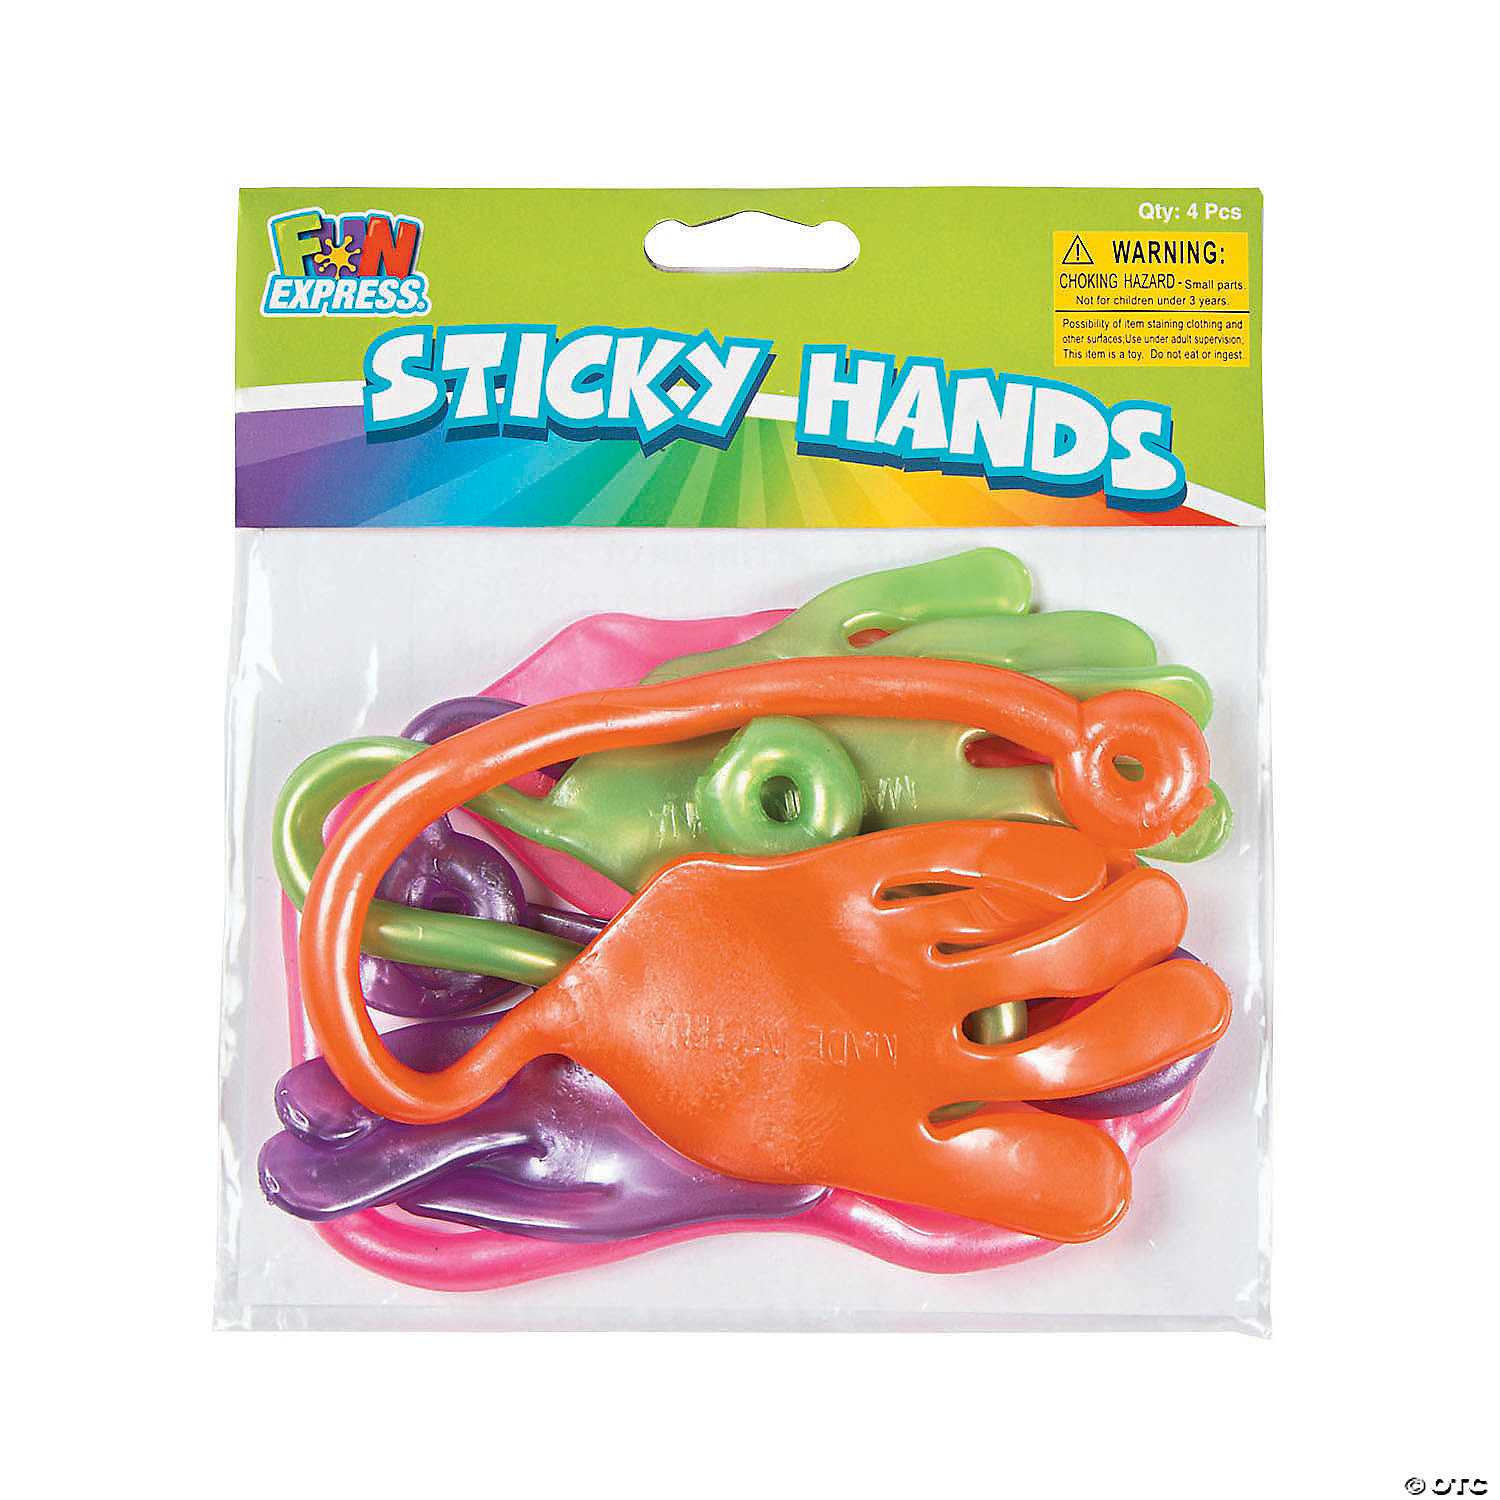 Giant Sticky Hands